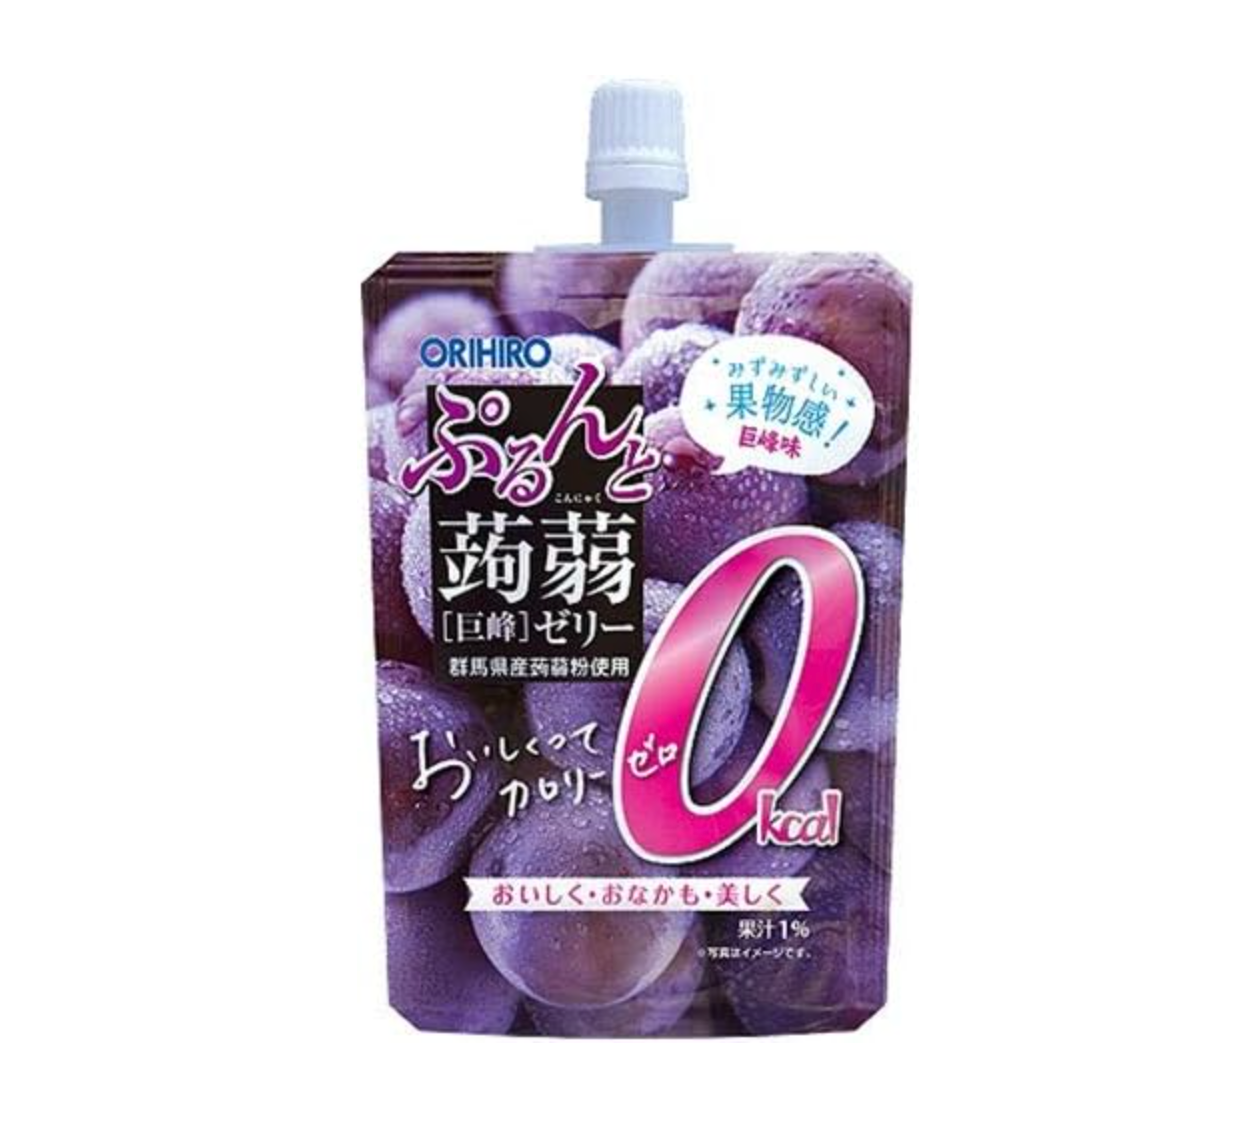 Orihiro Purun & Konjac Jelly 0 Calorie White Peach 130G Pouch X 48 Pieces - Japanese